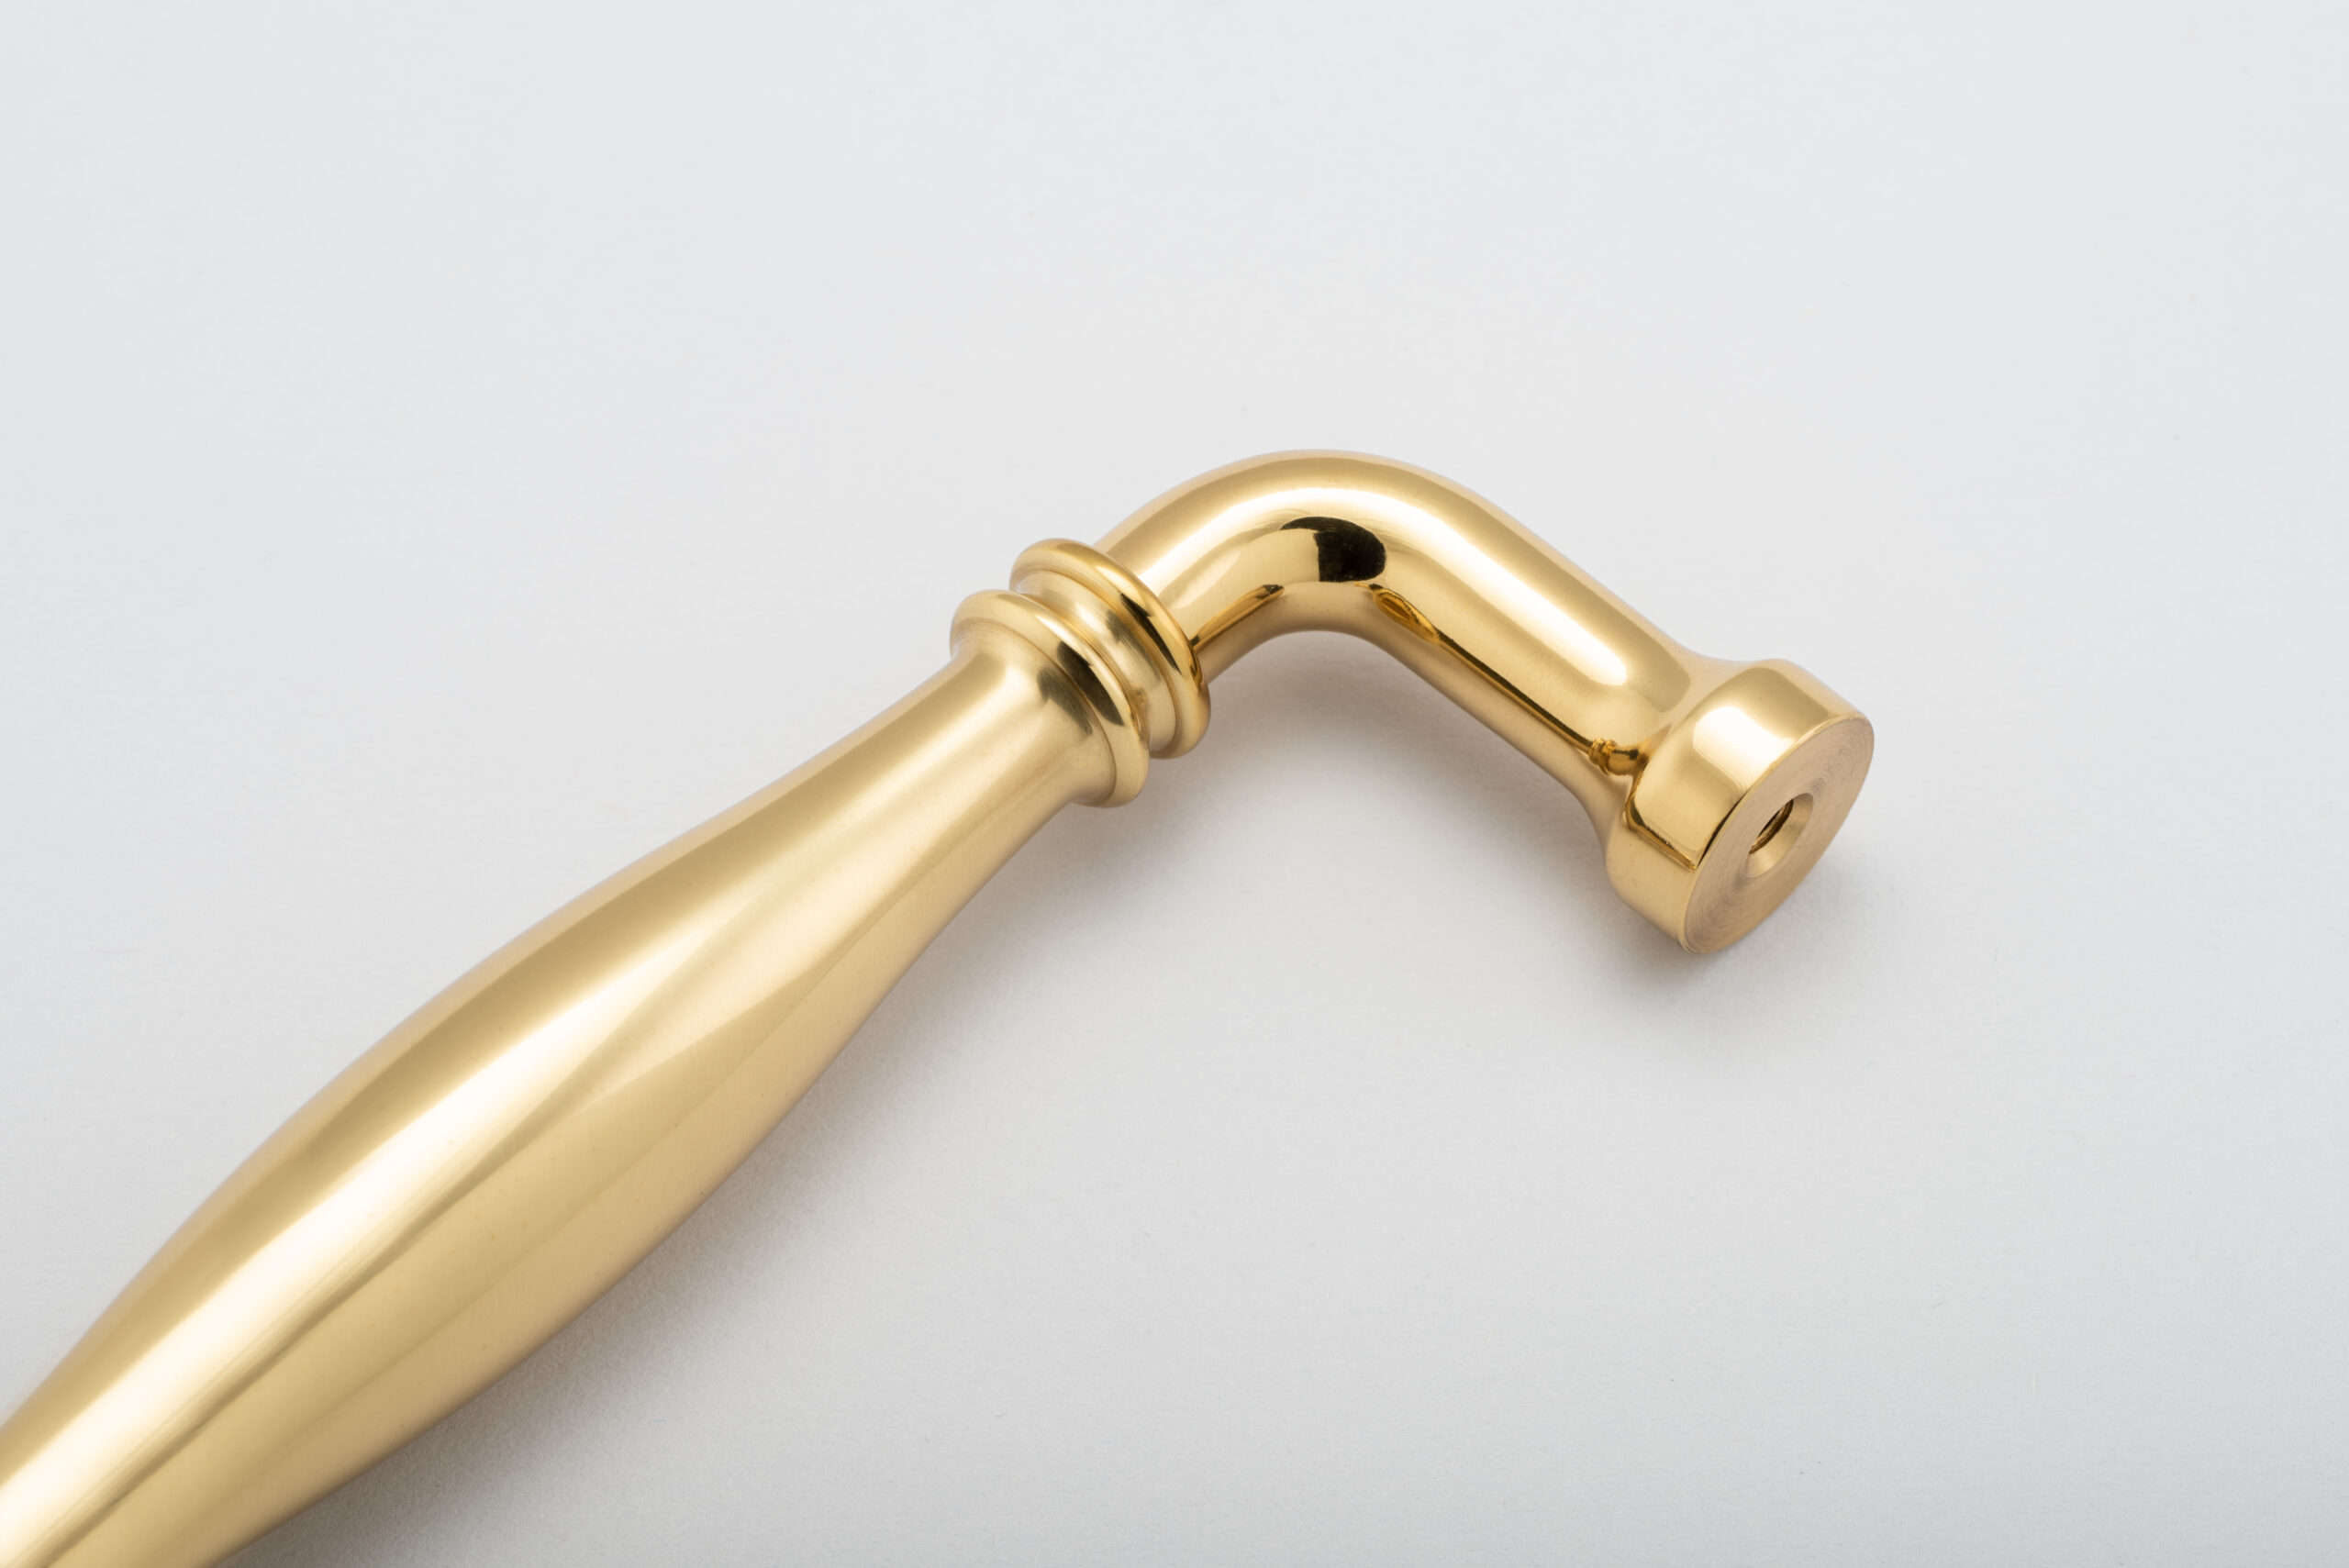 21100 - Sarlat Cabinet Pull - CTC450mm - Polished Brass